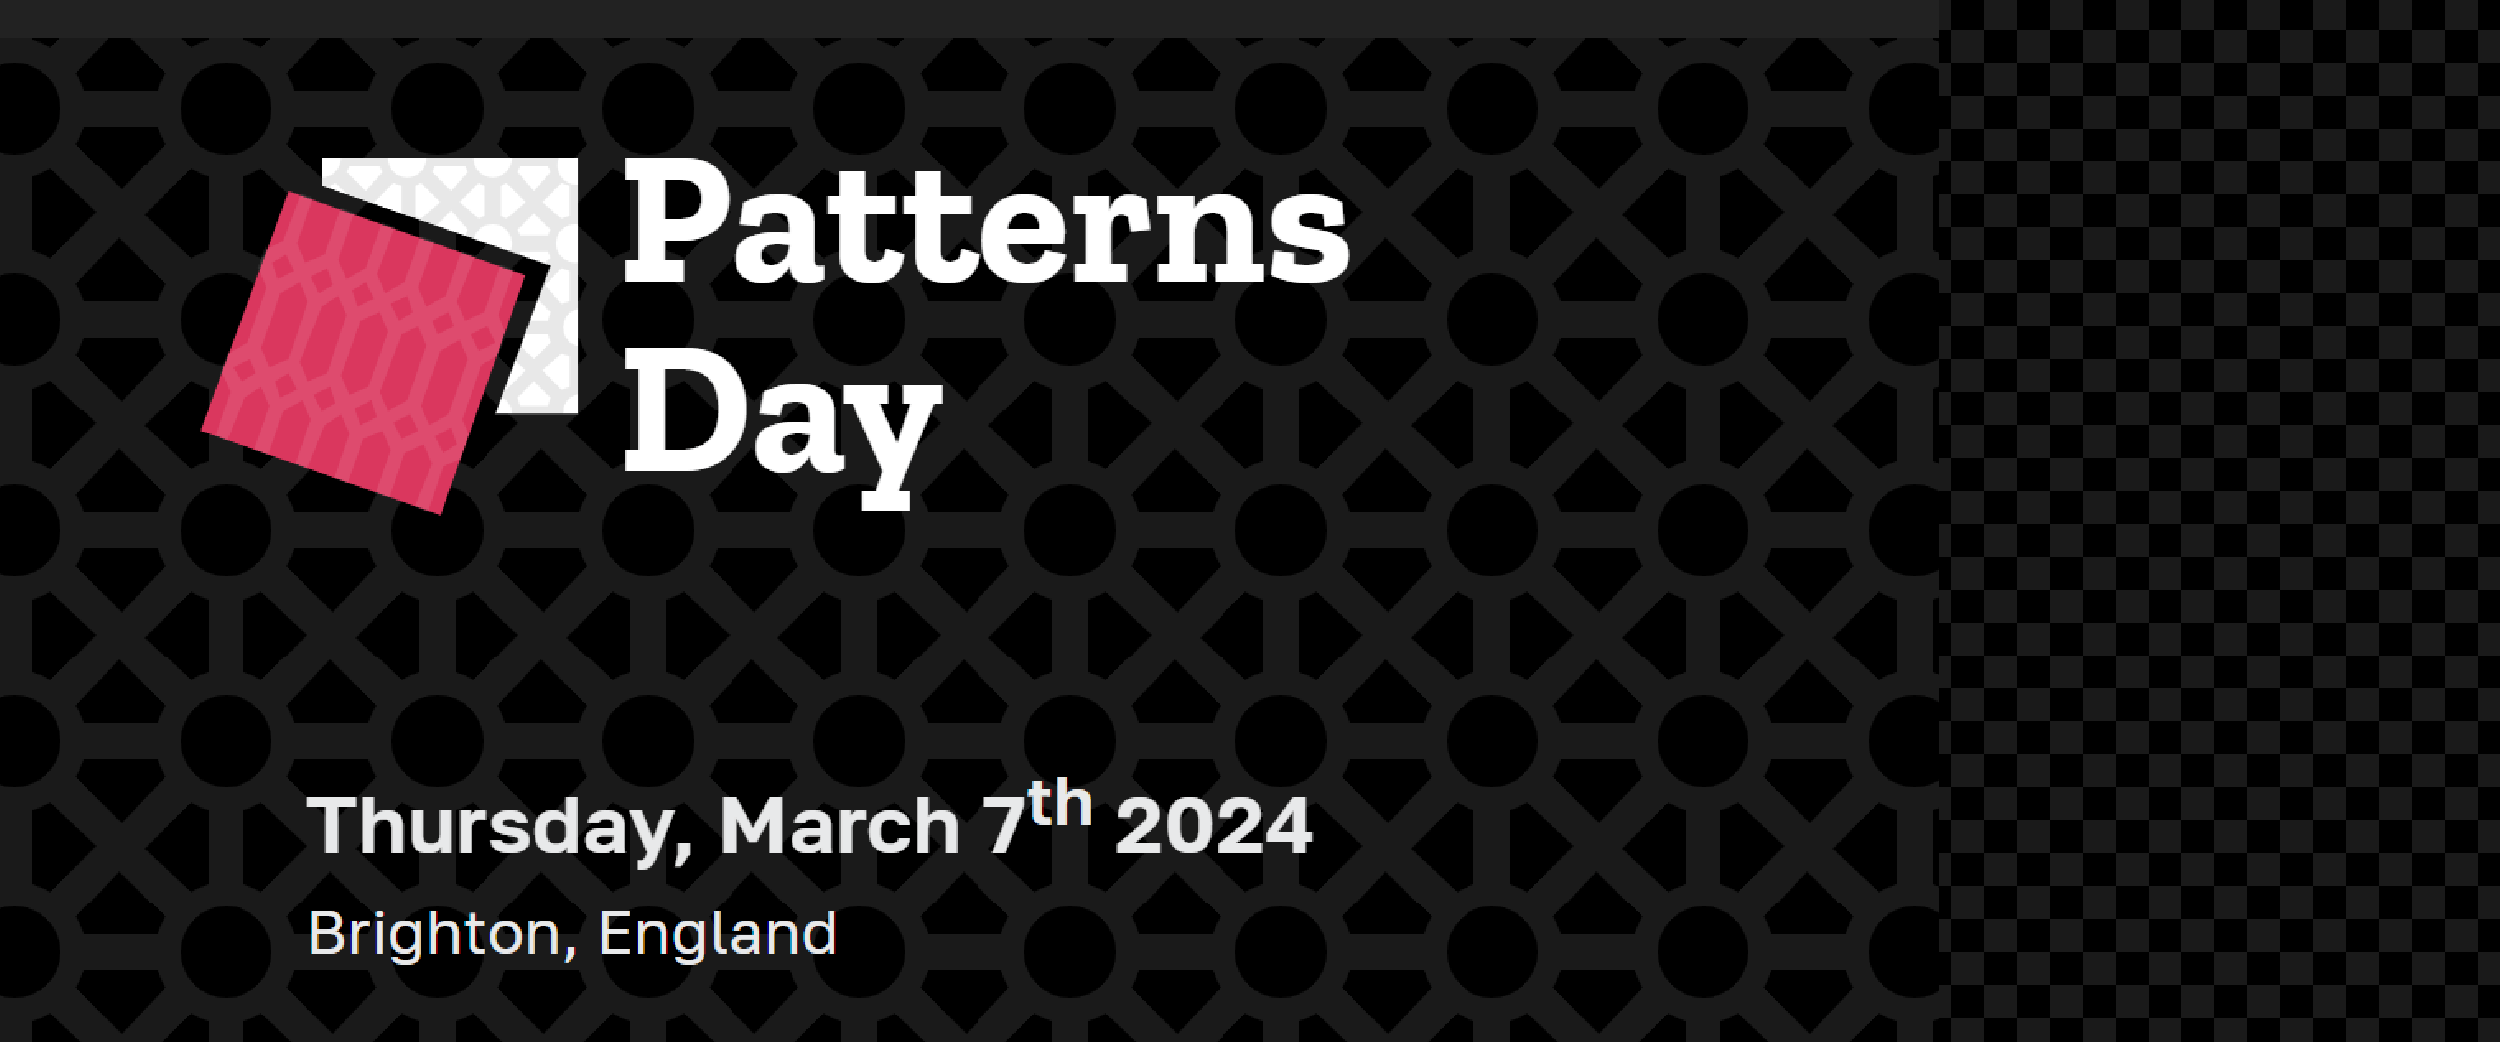 Patterns Day logo